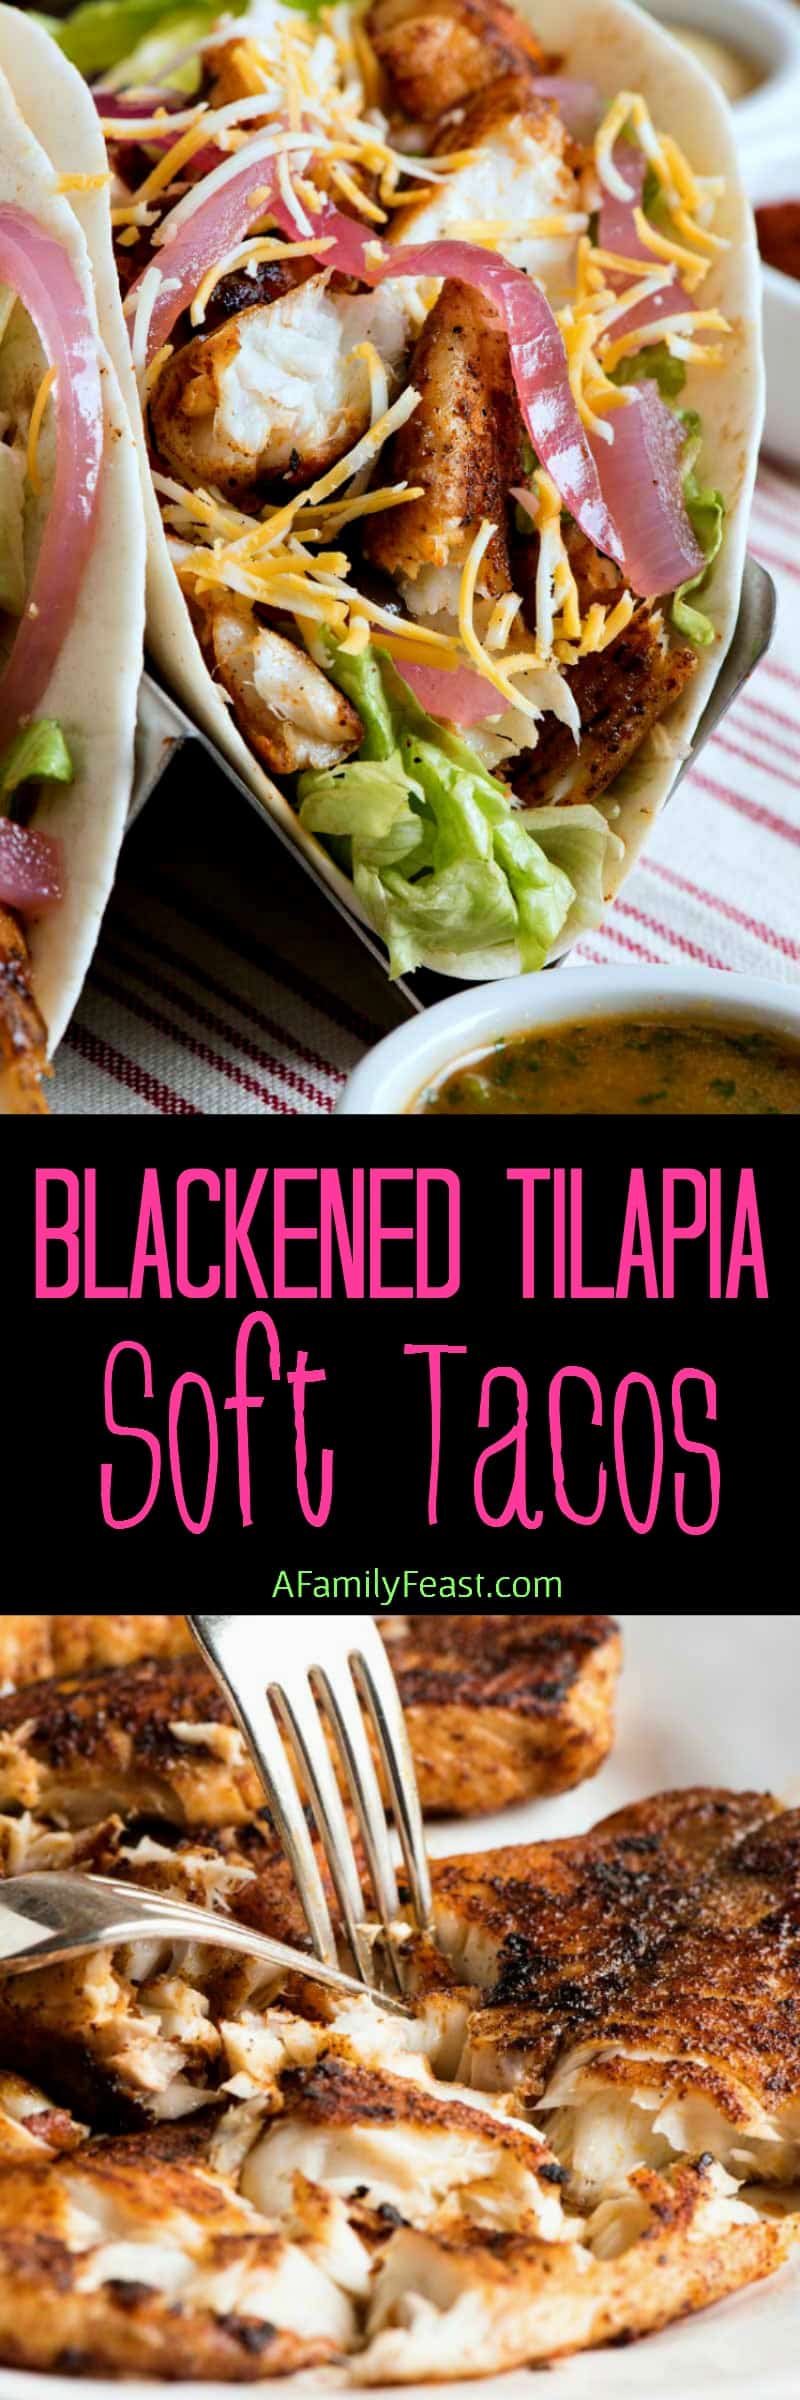 Blackened Tilapia Soft Tacos - A Family Feast